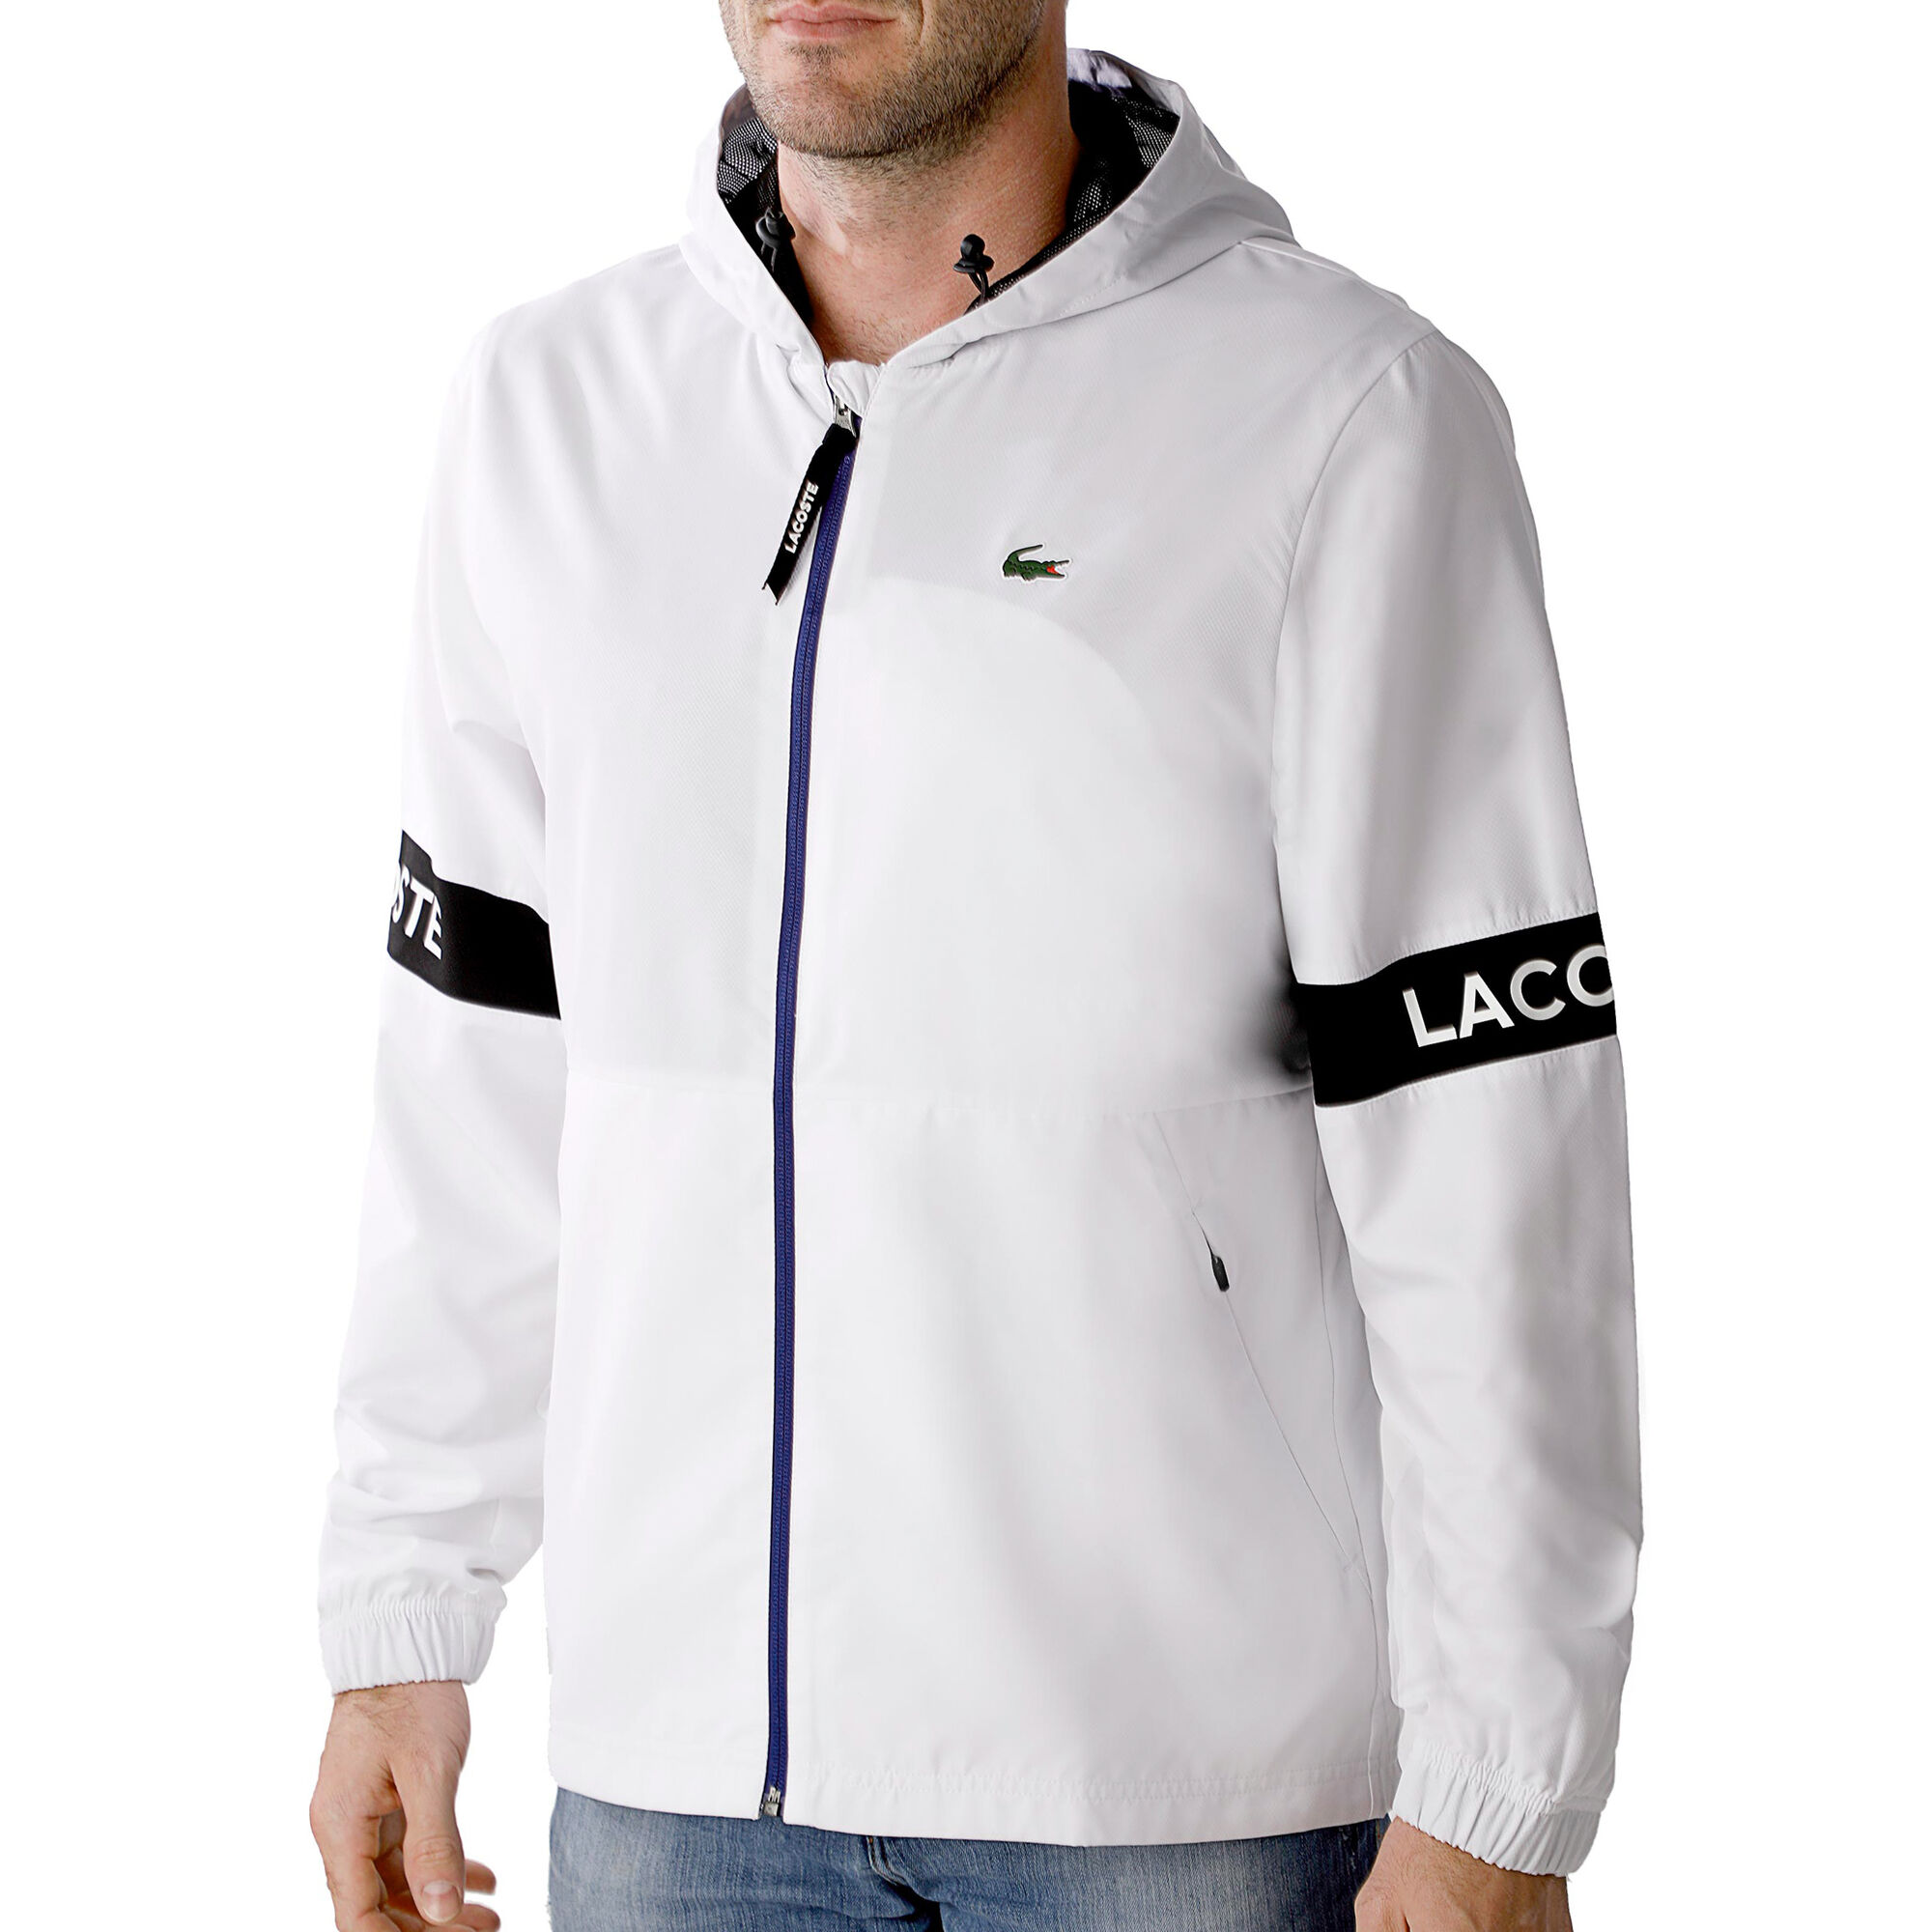 Lacoste Trainingsjacke Herren Weiß, Schwarz online kaufen | Tennis Point DE